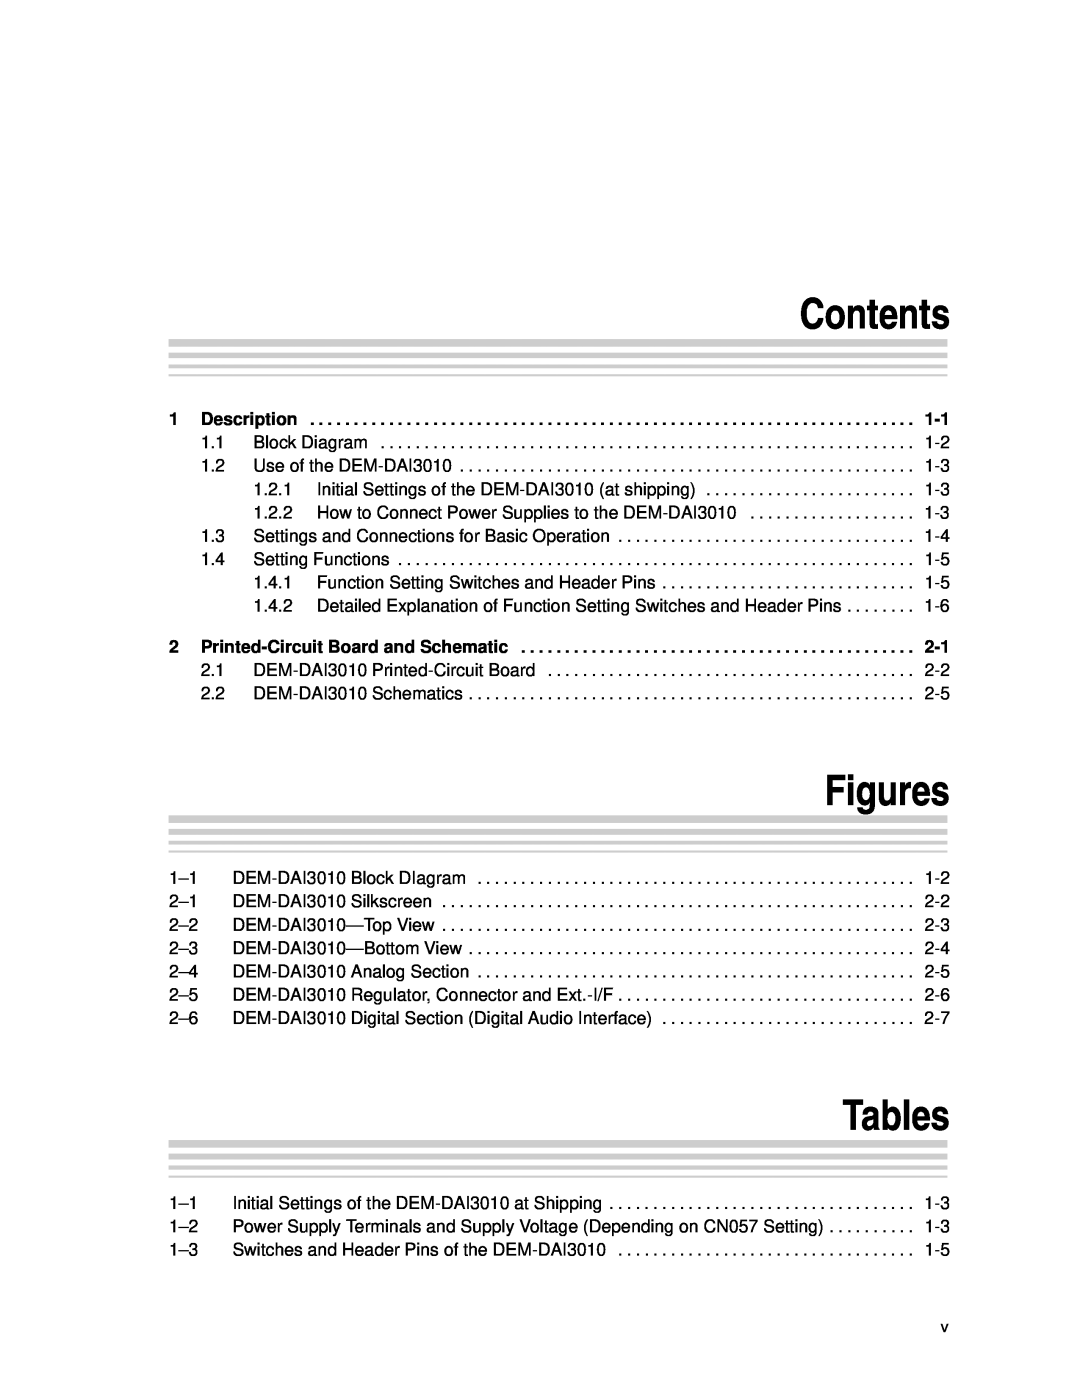 Texas Instruments DEM-DAI3010 manual Contents, Figures, Tables, Description, Printed-CircuitBoard and Schematic 